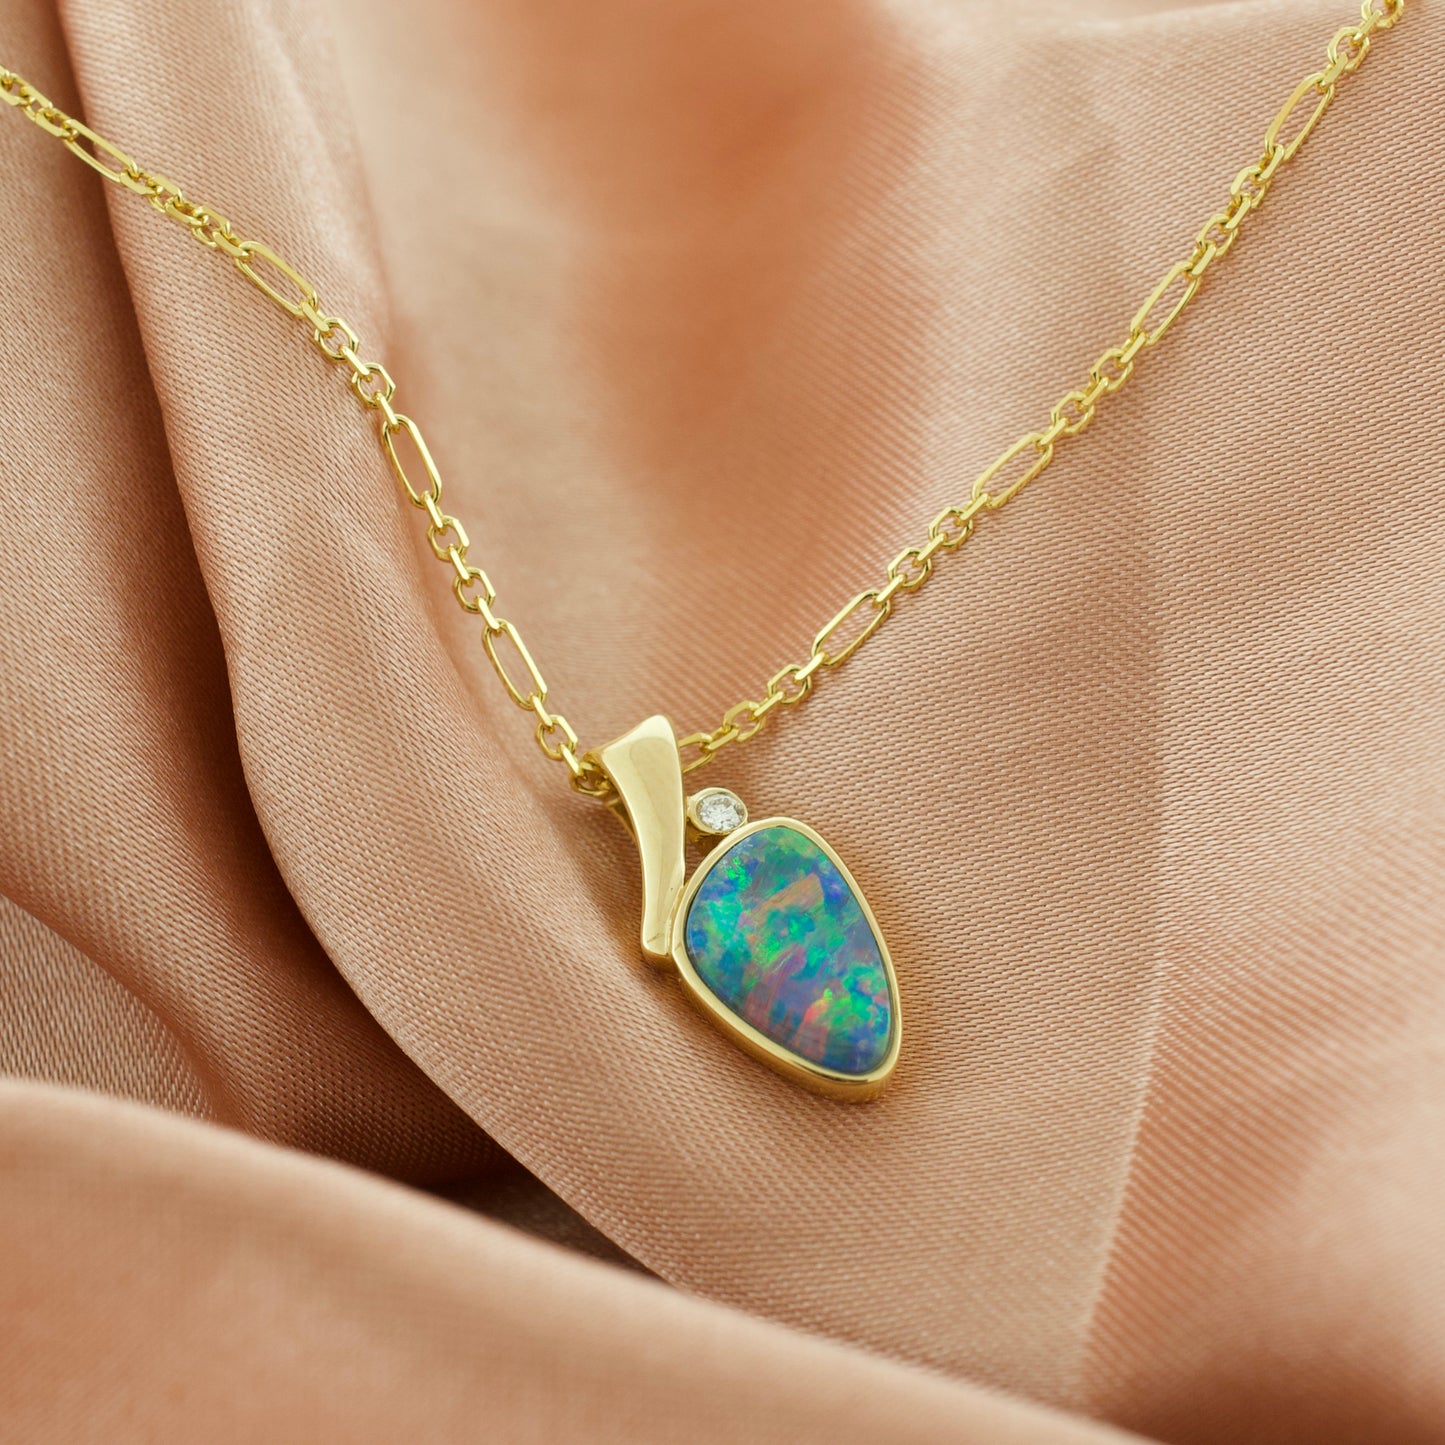 The Heart of Fire Opal Pendant